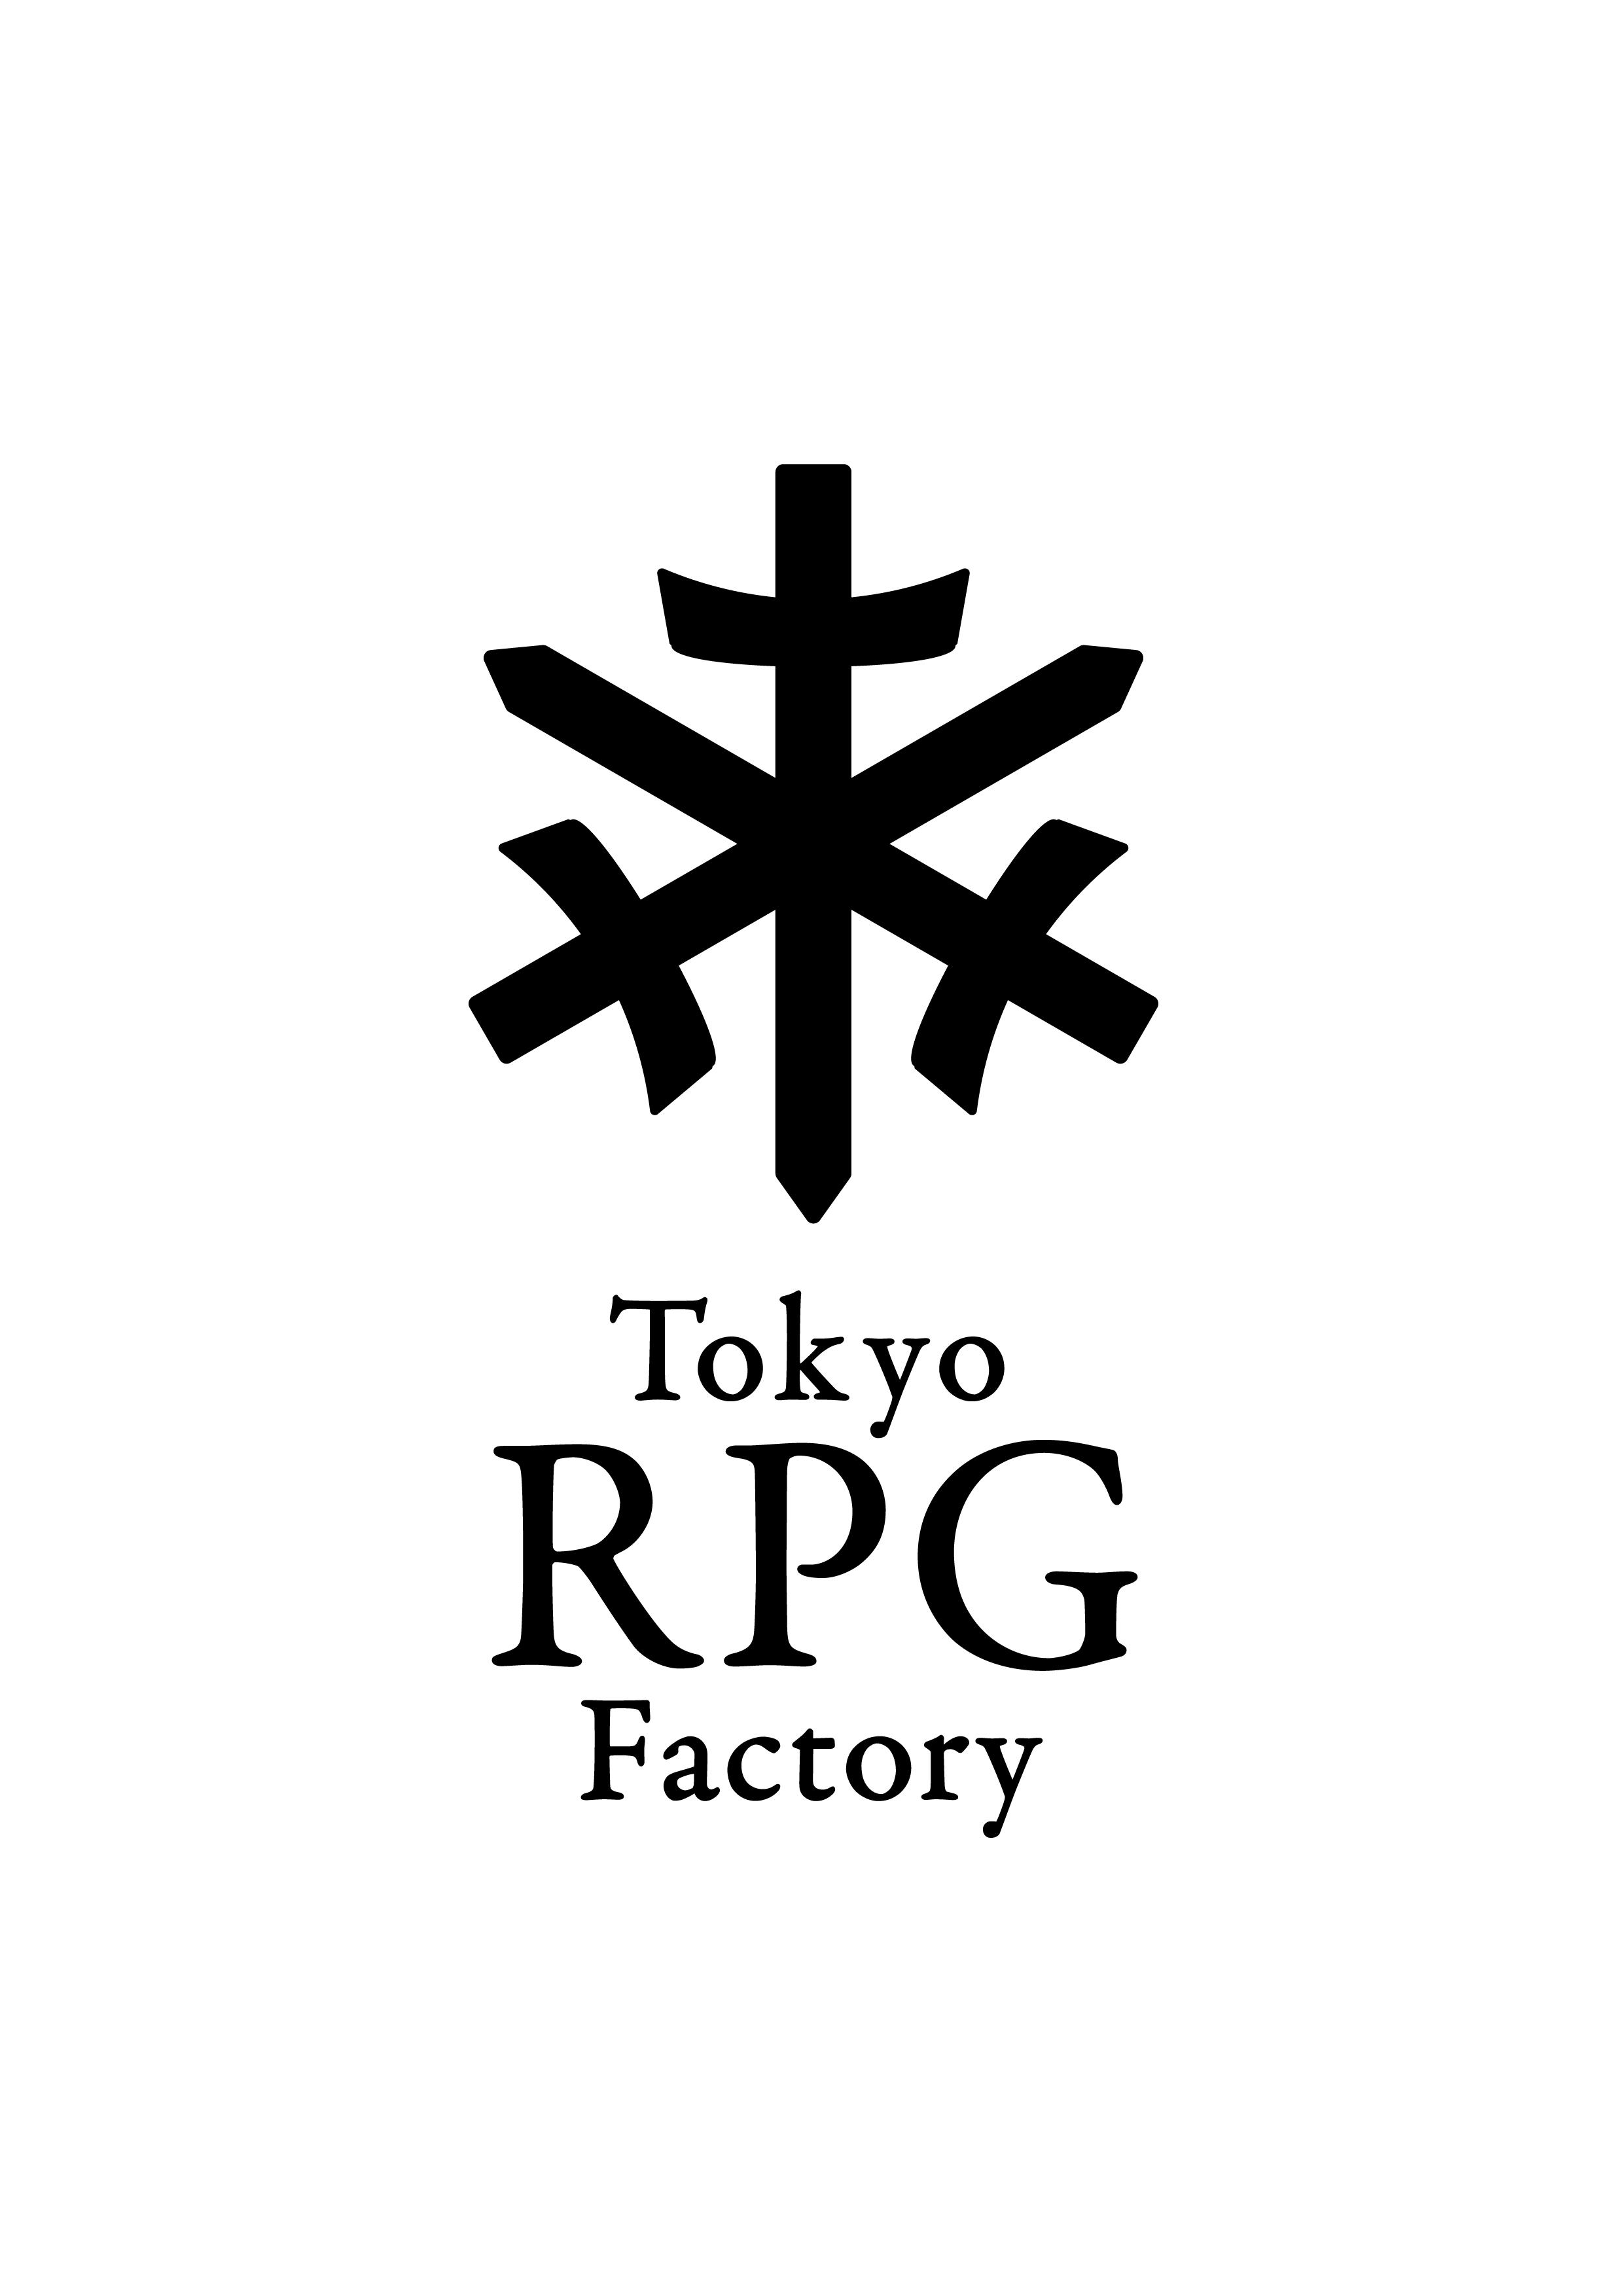 Tokyo RPG Factory_logo.jpg